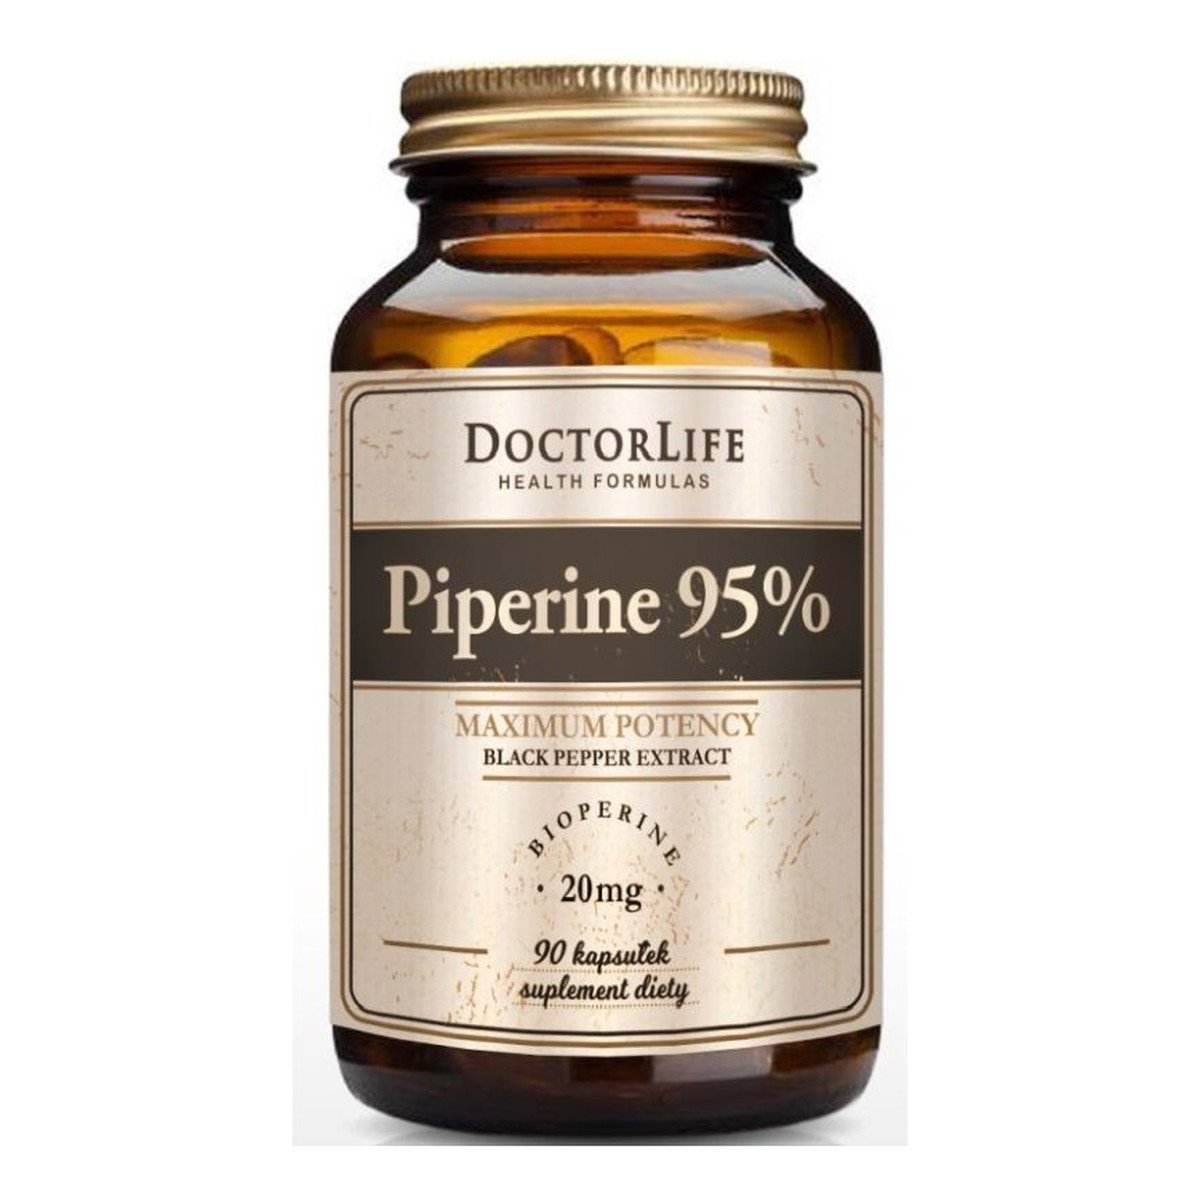 Doctor Life Piperine 95% Black Pepper Extract ekstrakt z czarnego pieprzu 20mg suplement diety 90 kapsułek 20mg